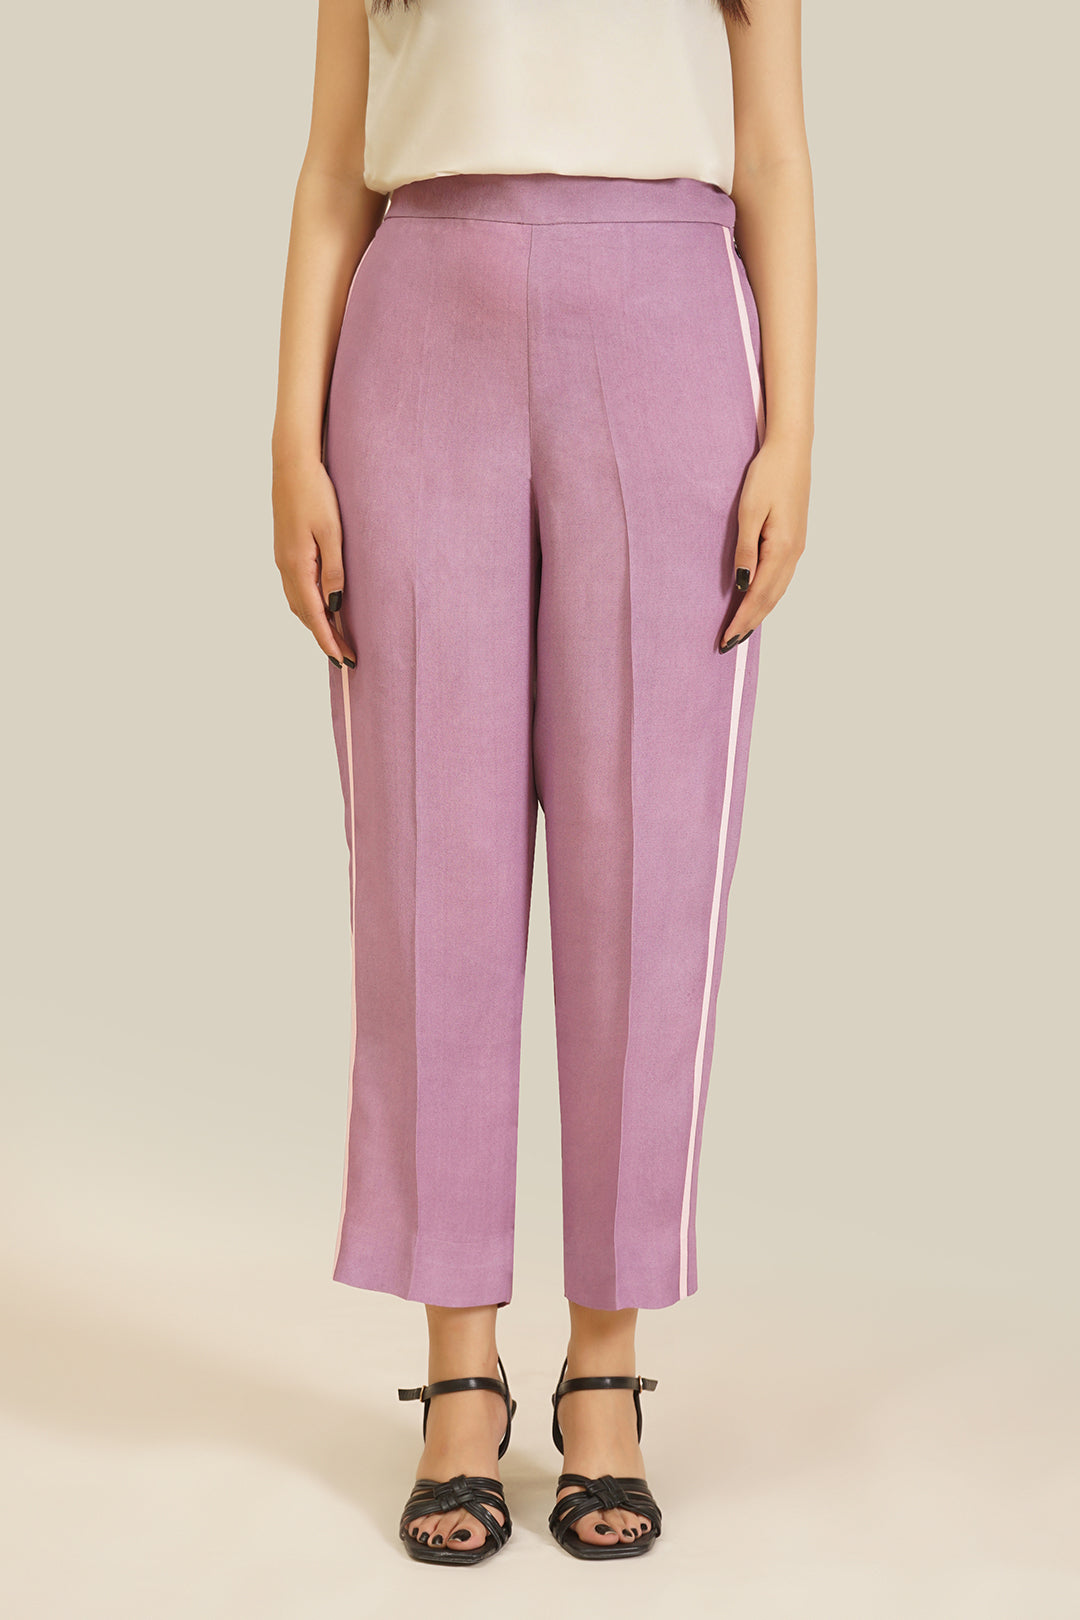 Pink & Purple Pants